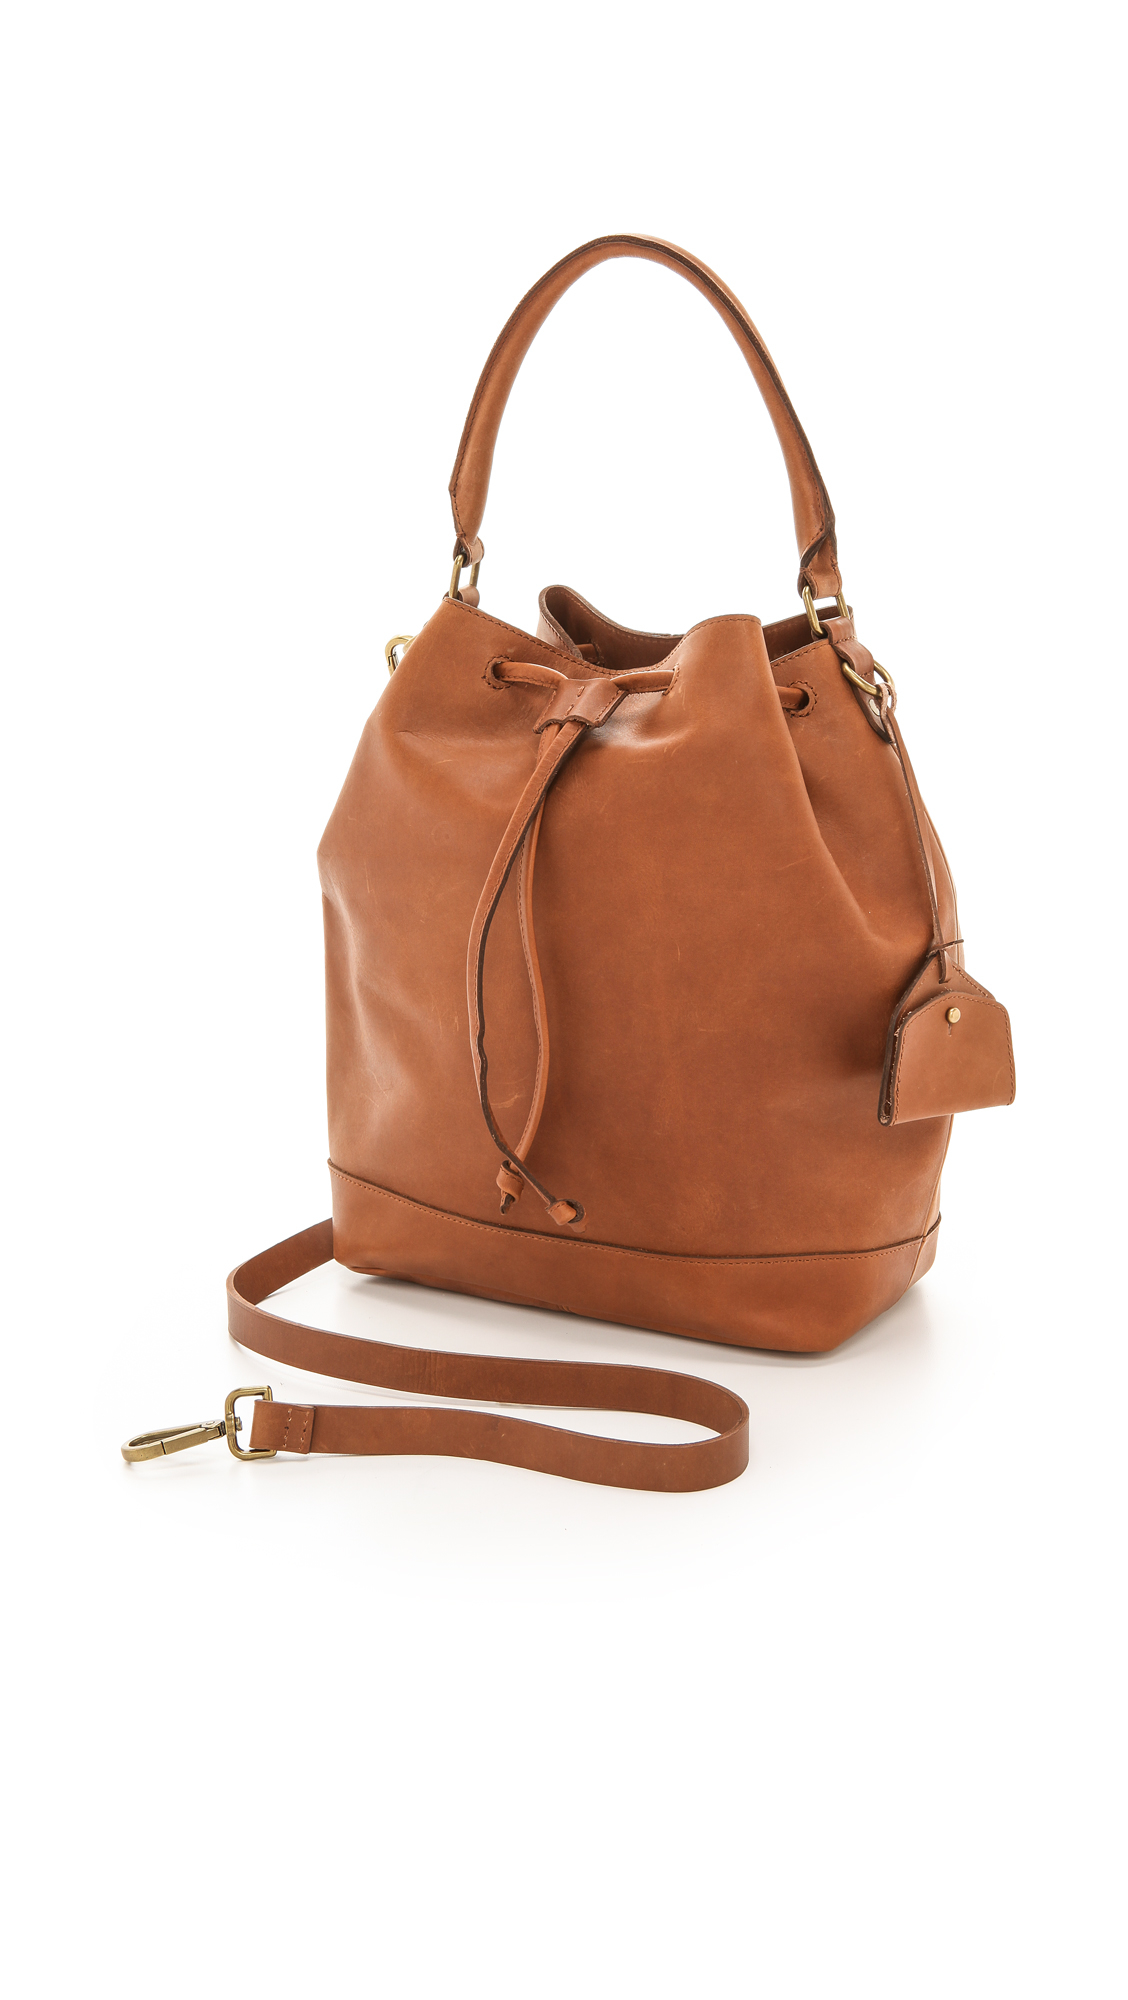 Madewell's Classic Leather Tote Bag | semashow.com